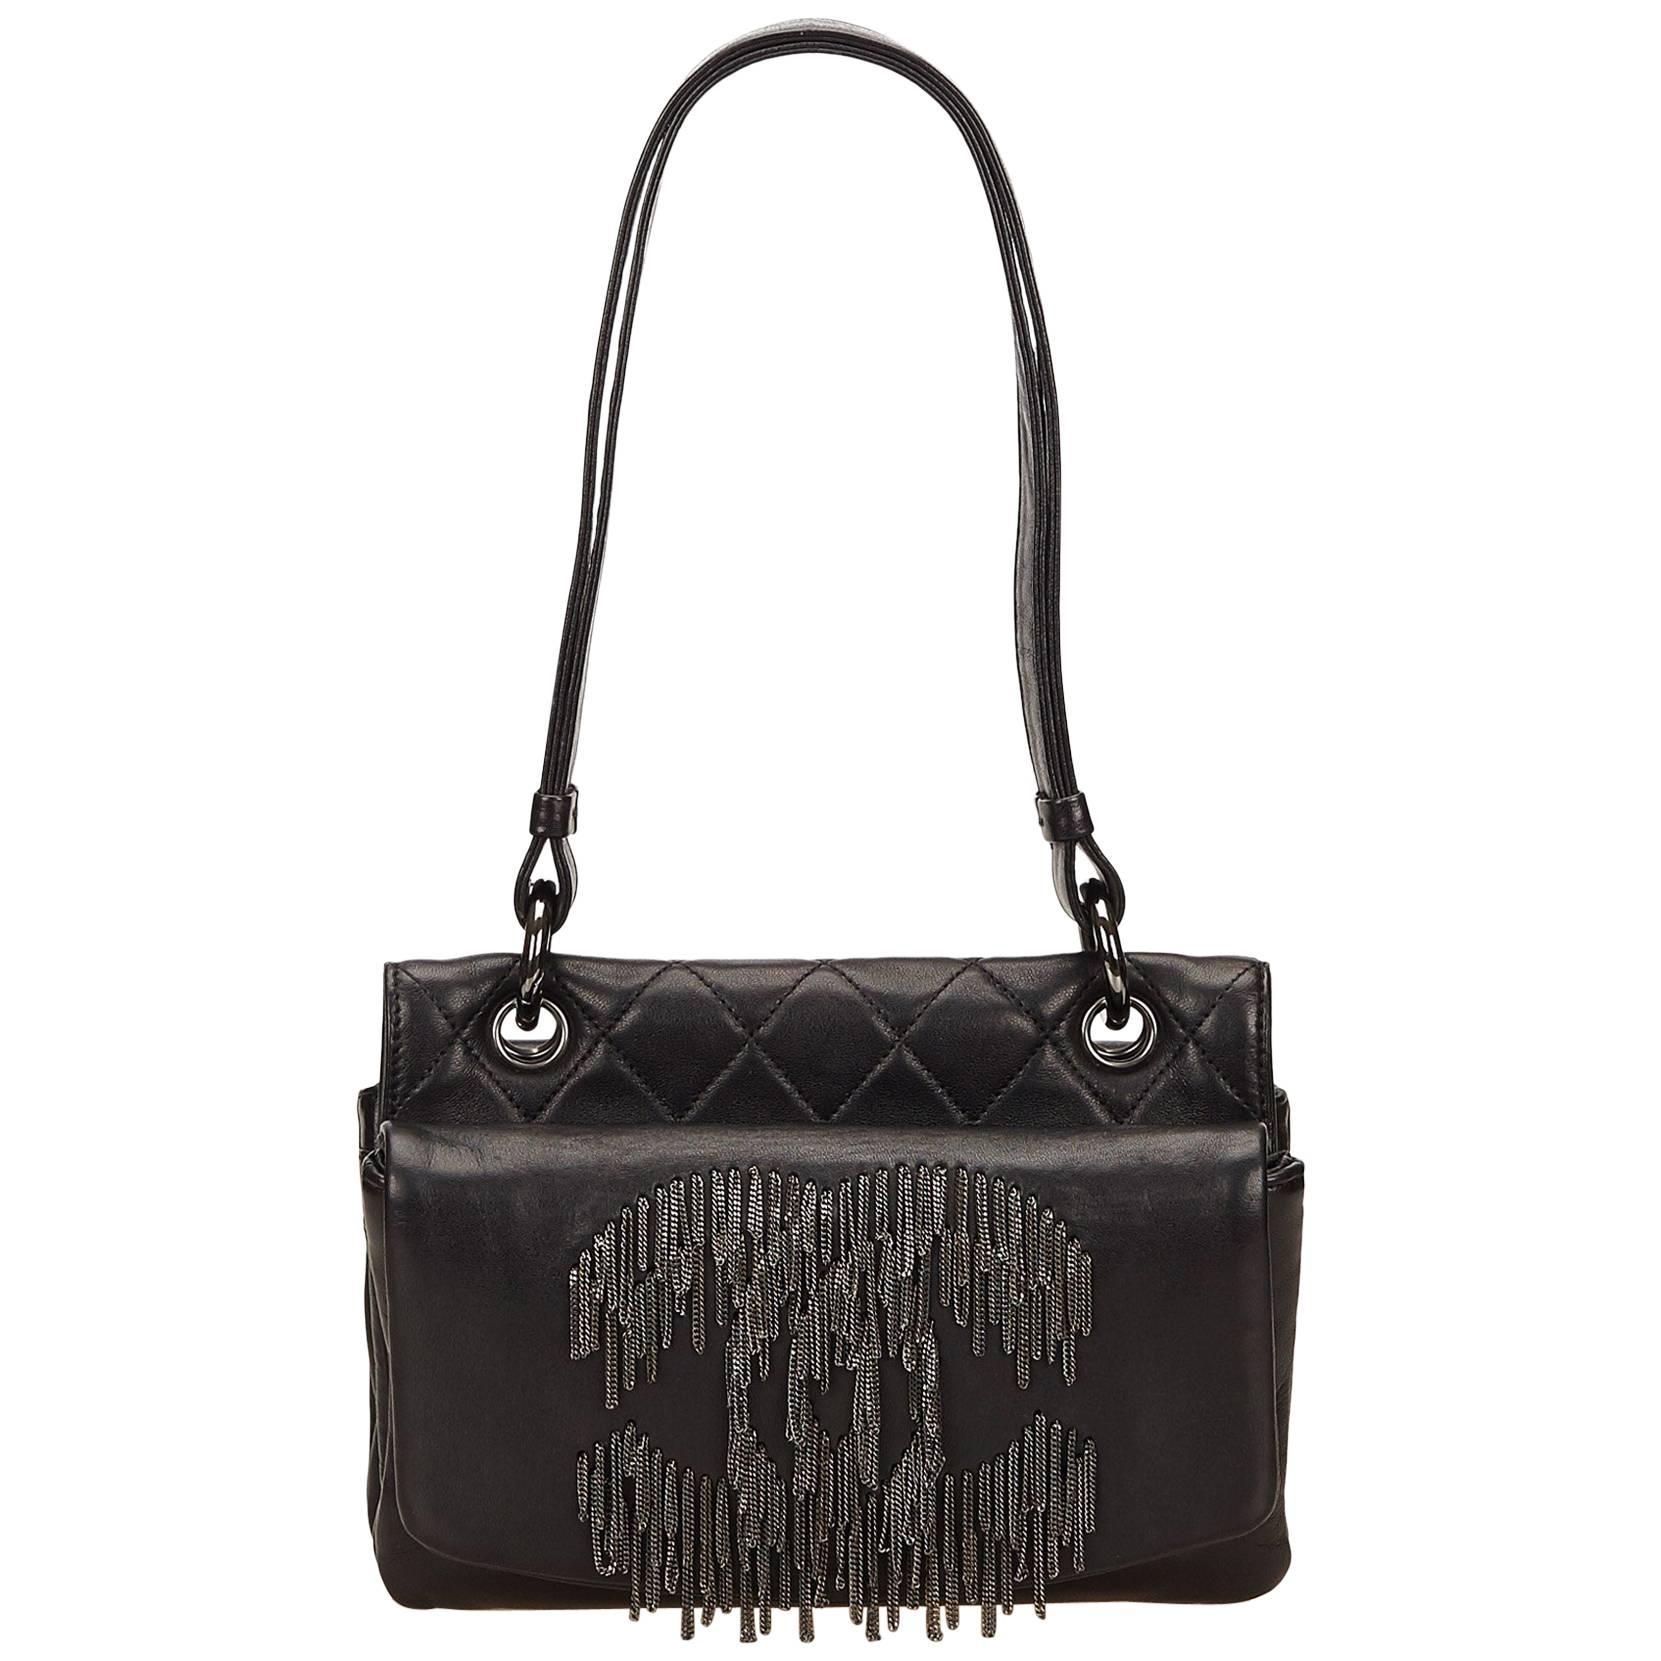 Chanel Black Leather Silver "CC" Fringe Chain Handbag 